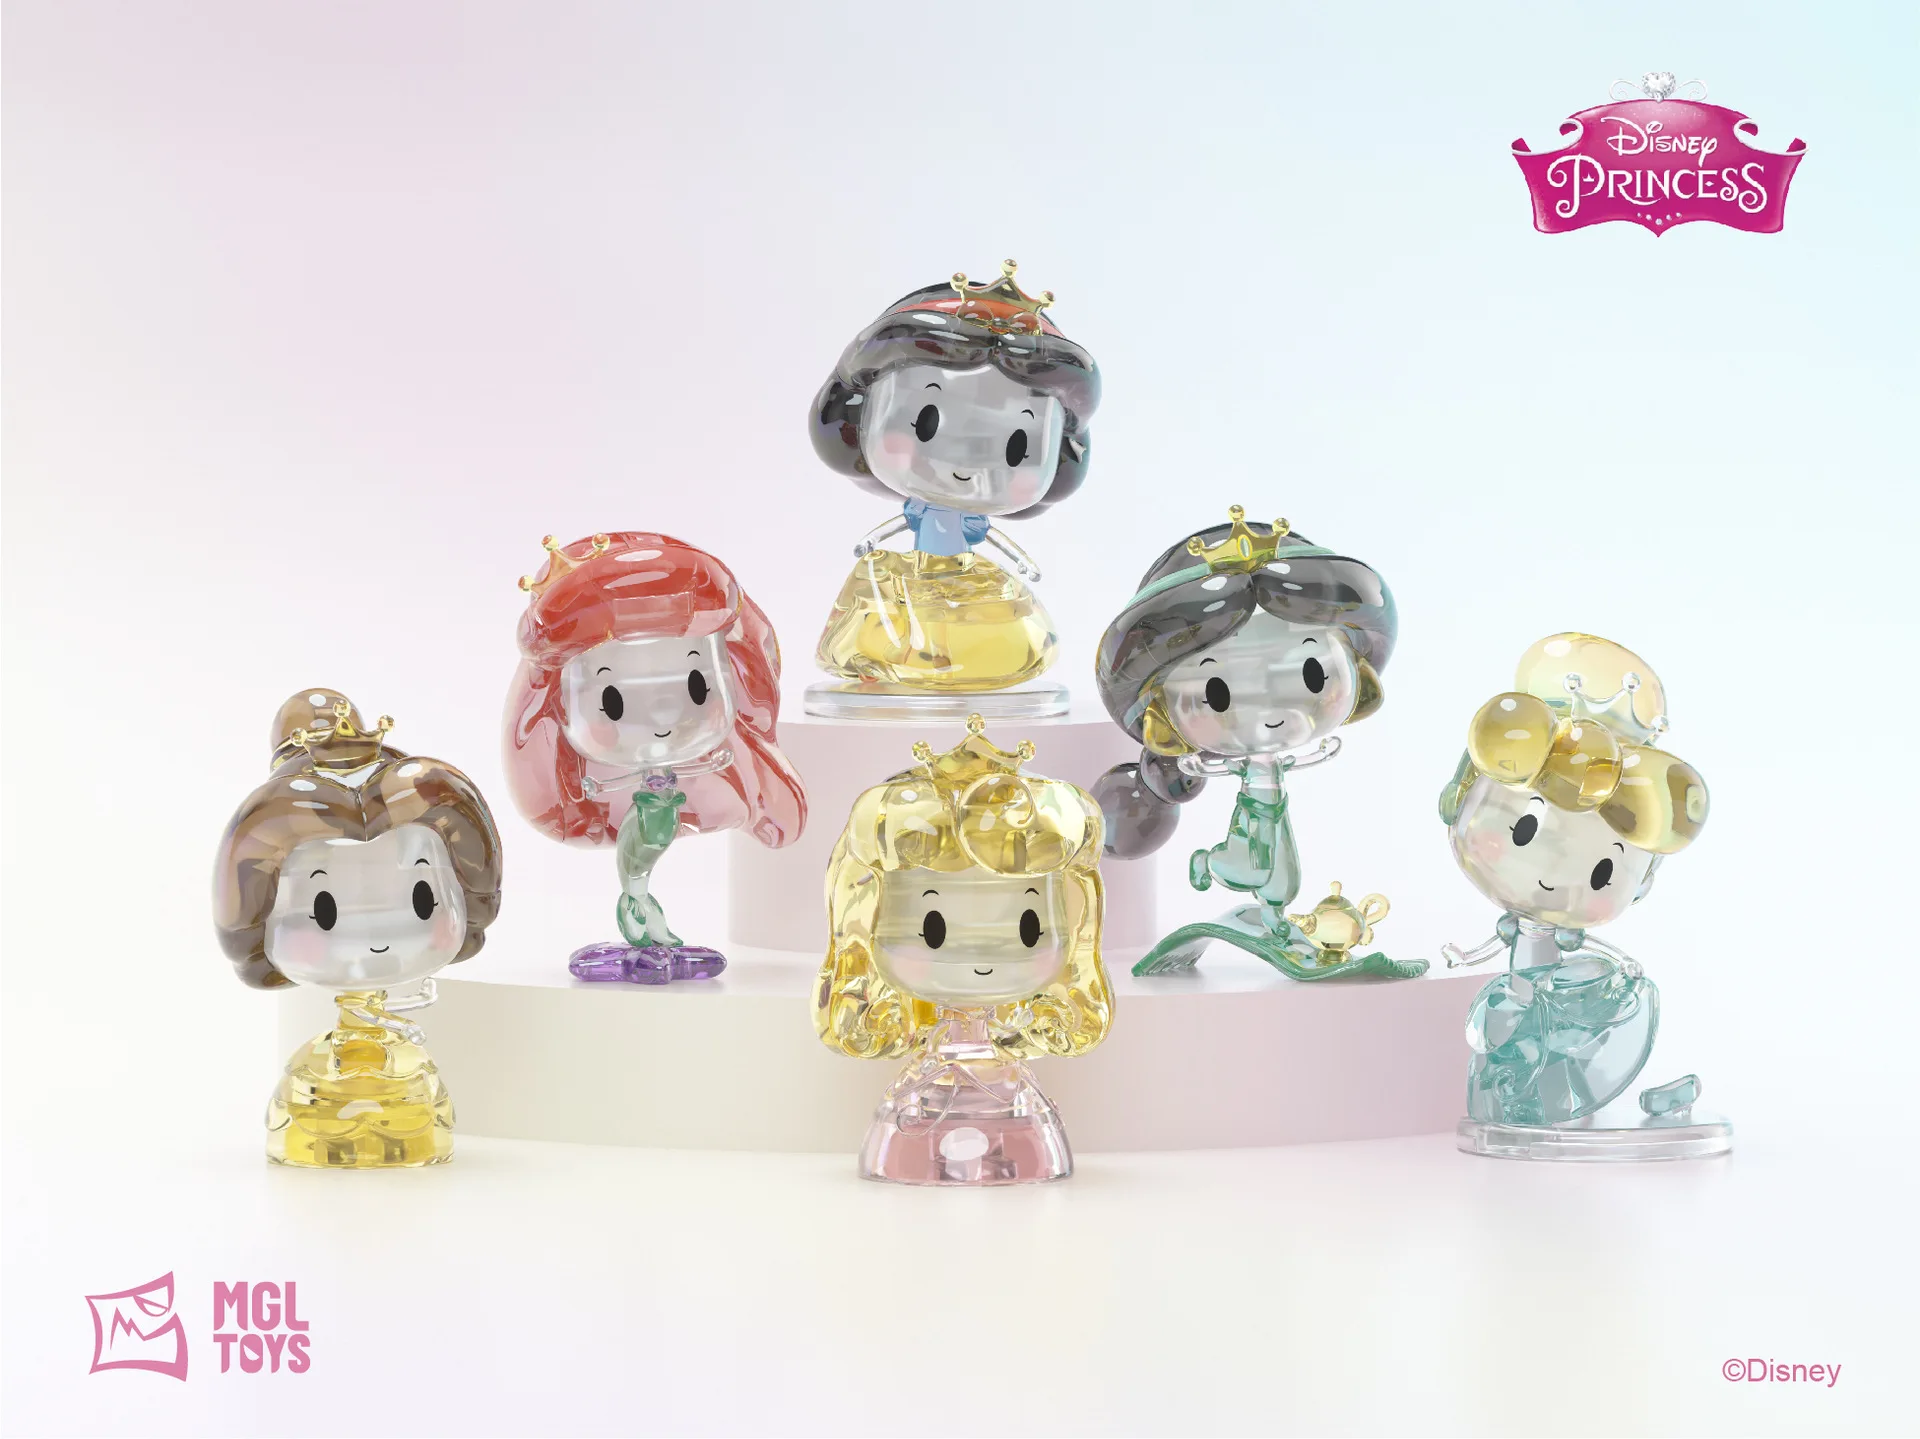 MGL Original Disney Princess Snow White Ariel Bell Jasmine Cinderella crystal Block Figure Collection Model Toys